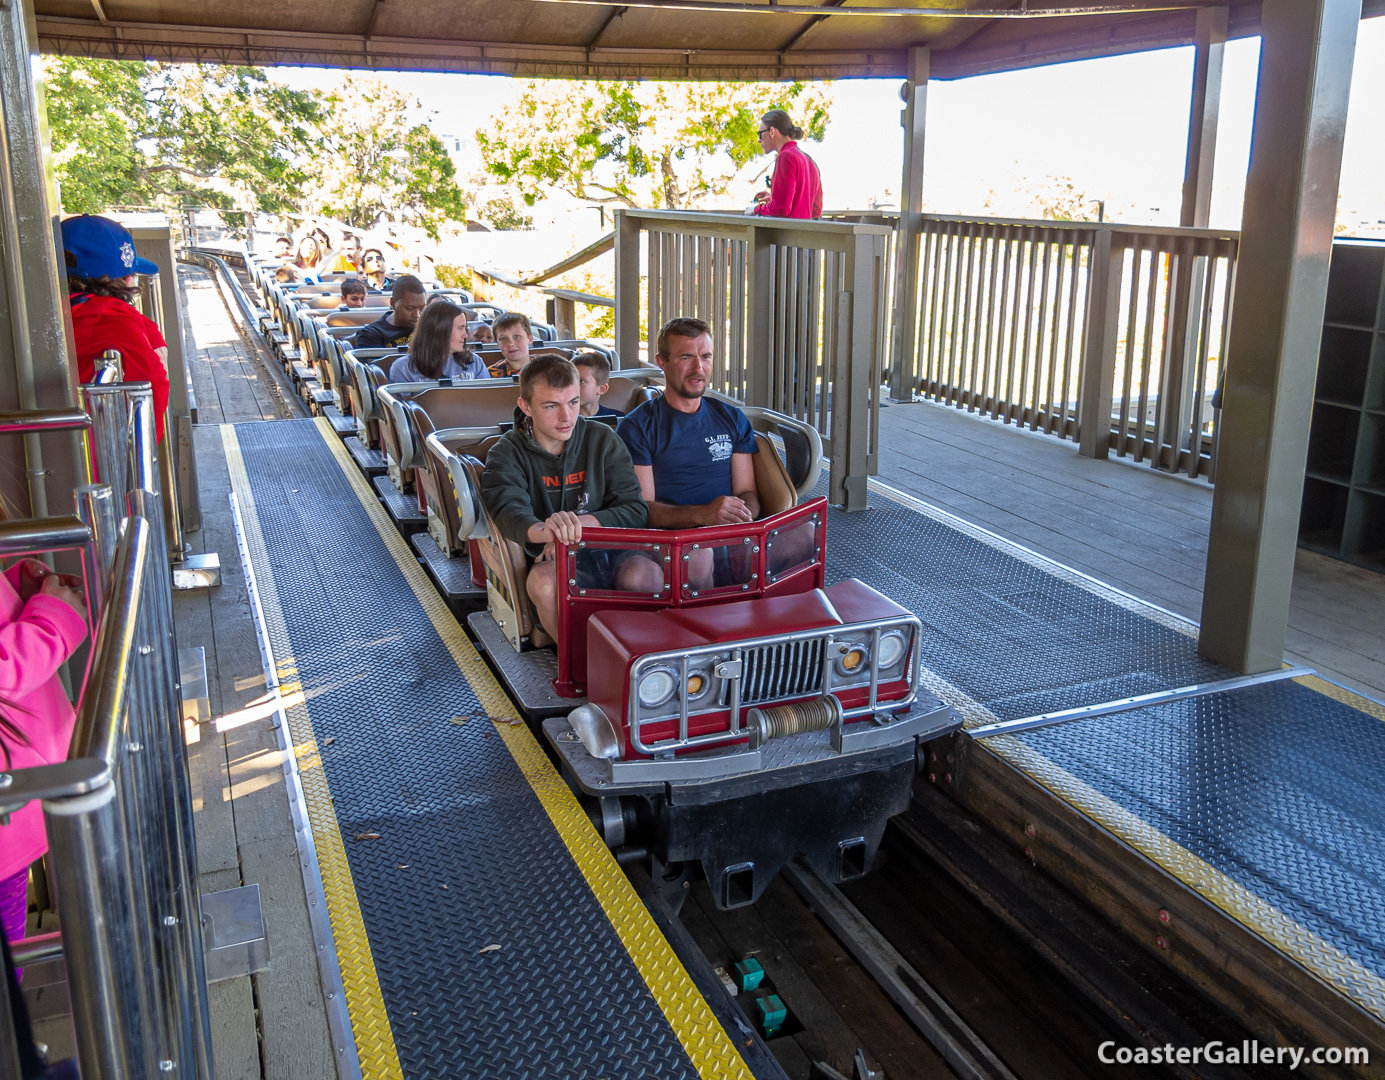 Mini-llennium Flyer trains on a wooden roller coaster in Florida